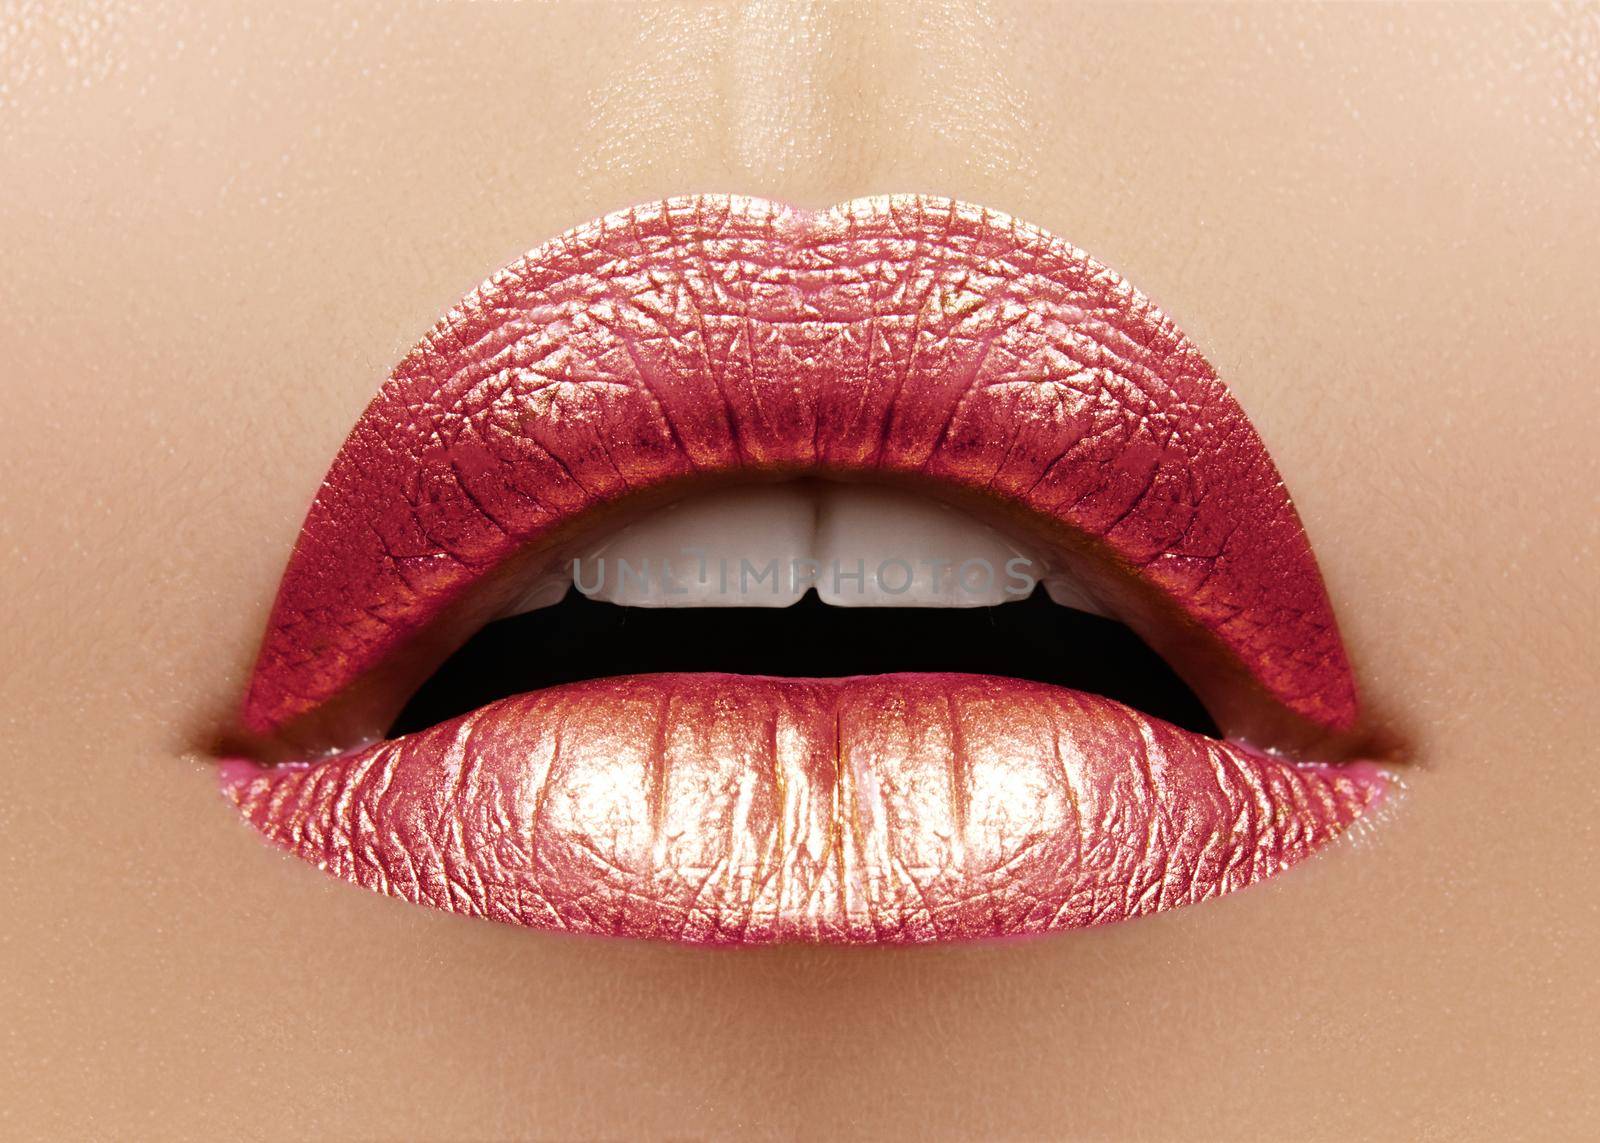 Beautiful Closeup with Female Plump Lips with Shiny Pink Makeup. Fashion Celebrate Make-up, Glitter Cosmetic by MarinaFrost